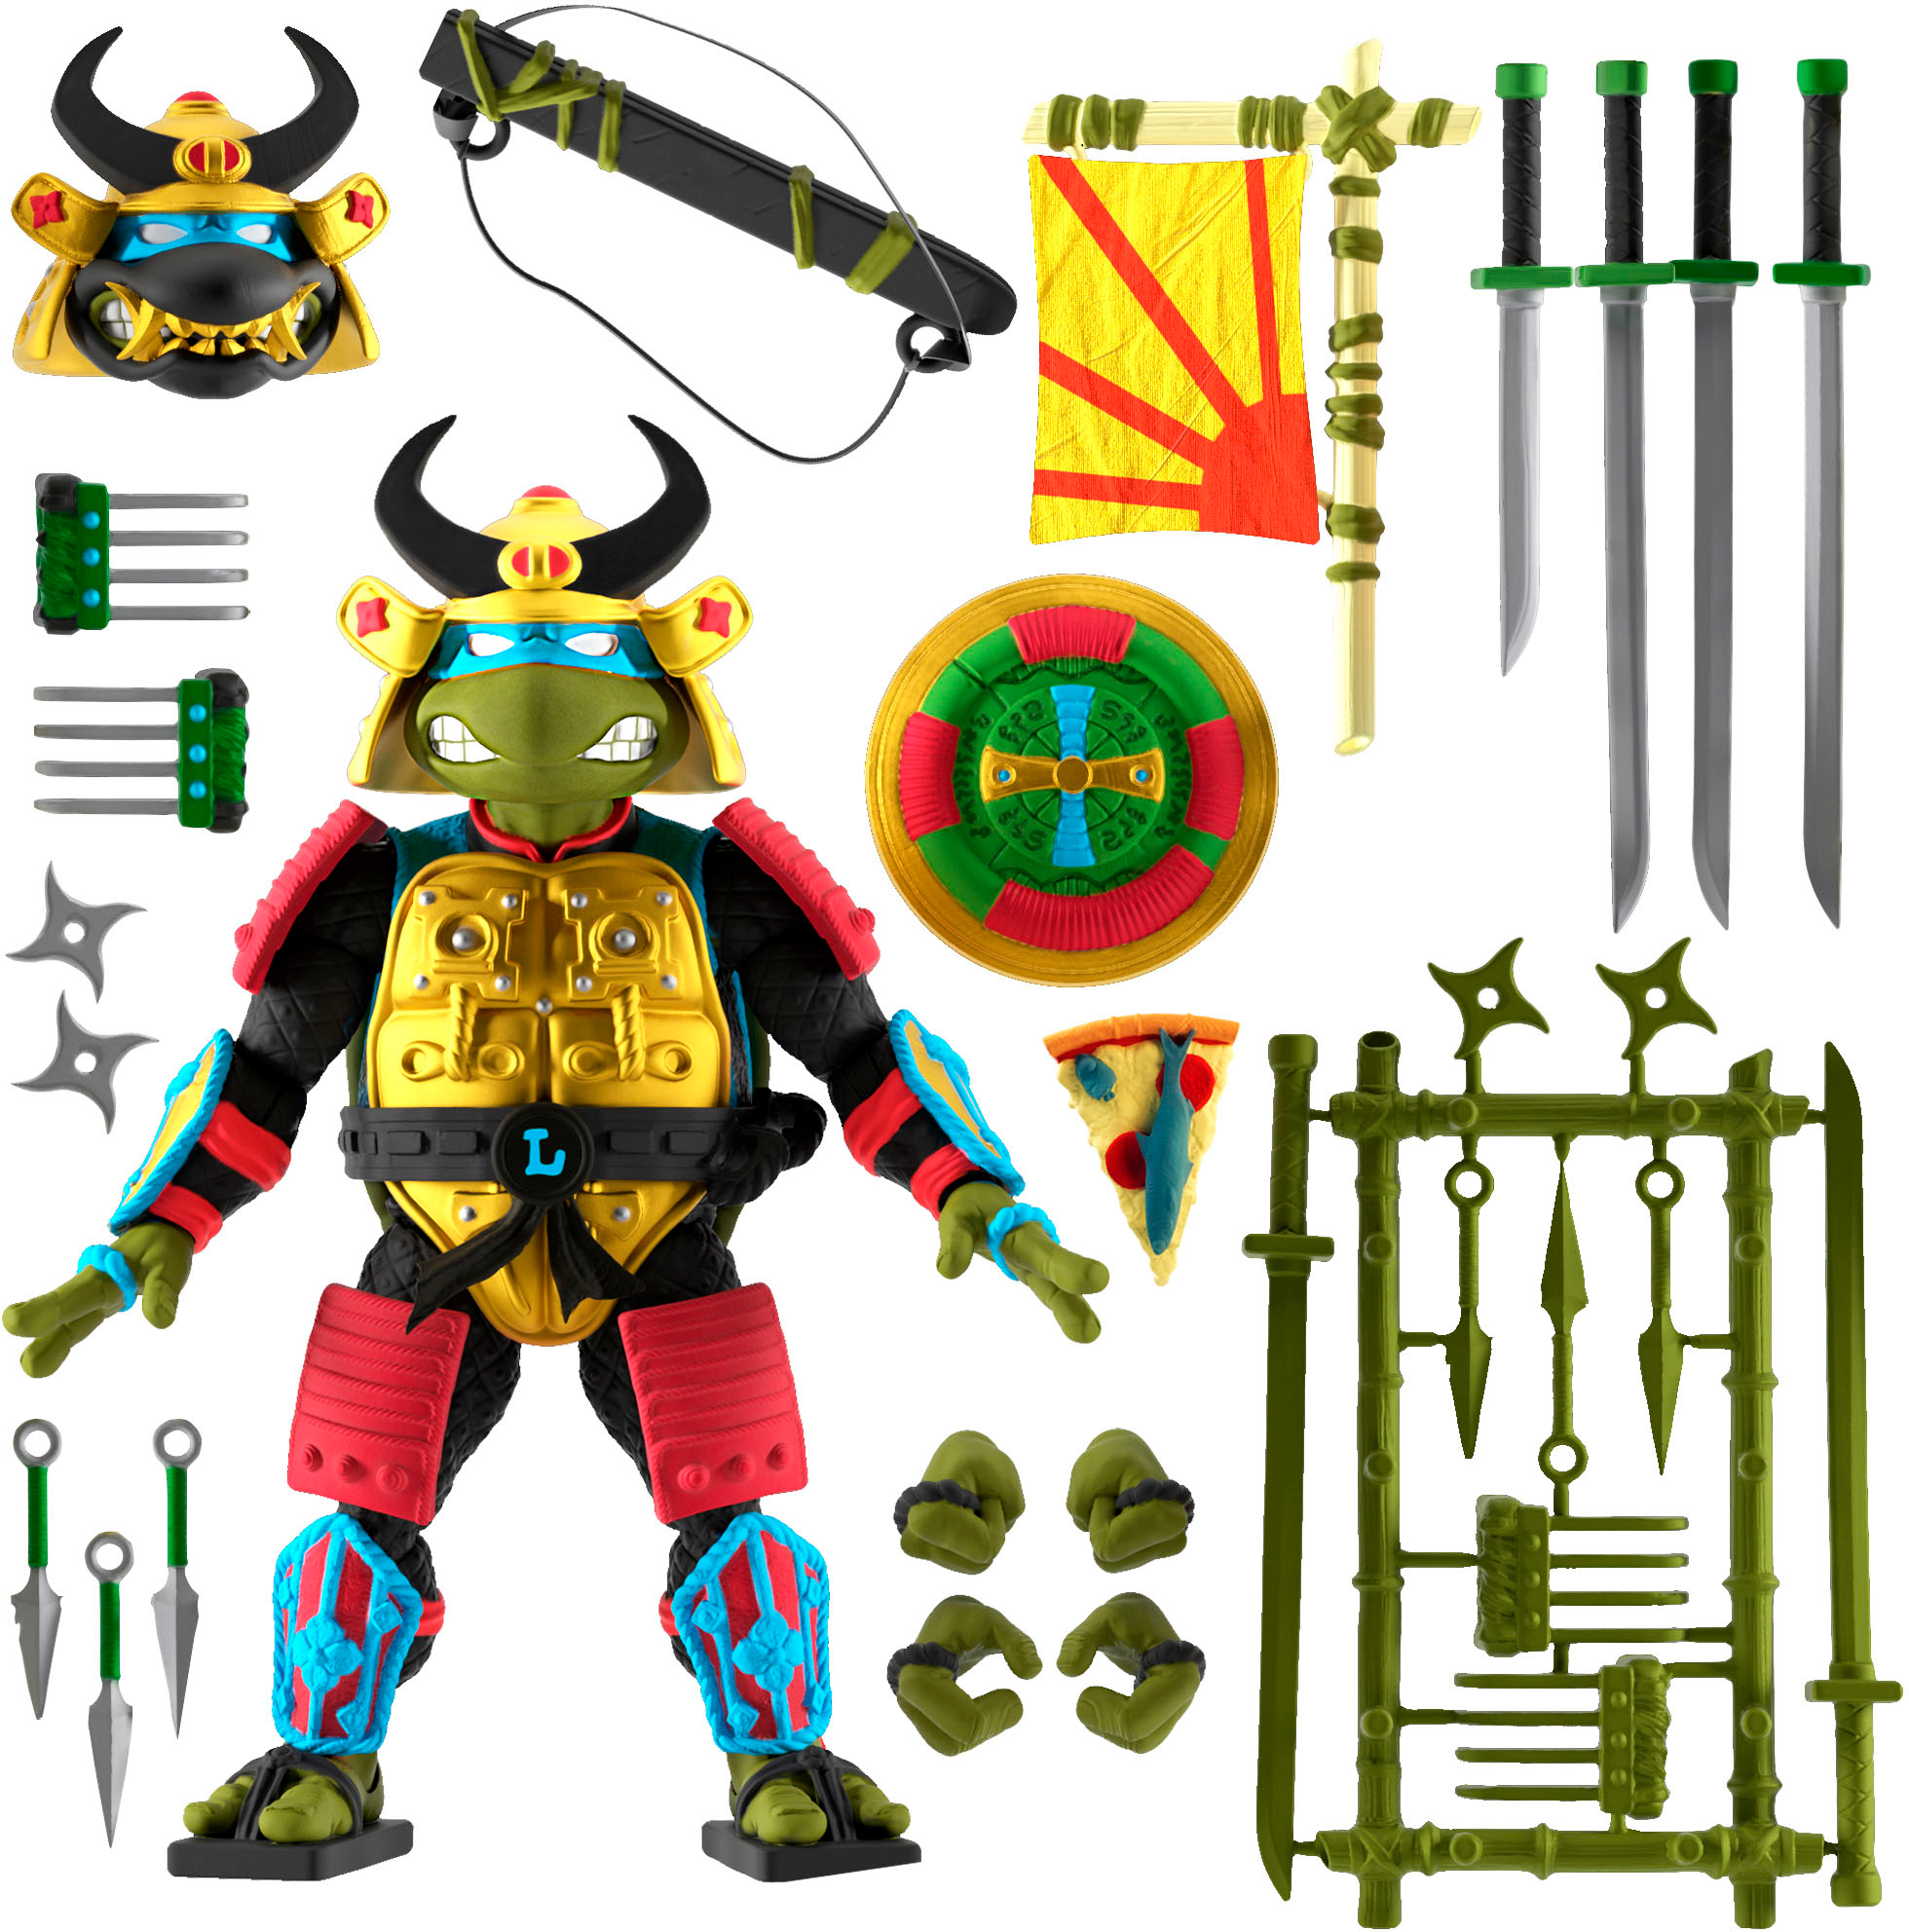  Teenage Mutant NECA Ninja Turtles 7 Super Shredder Shadow  Master Action Figure : Toys & Games